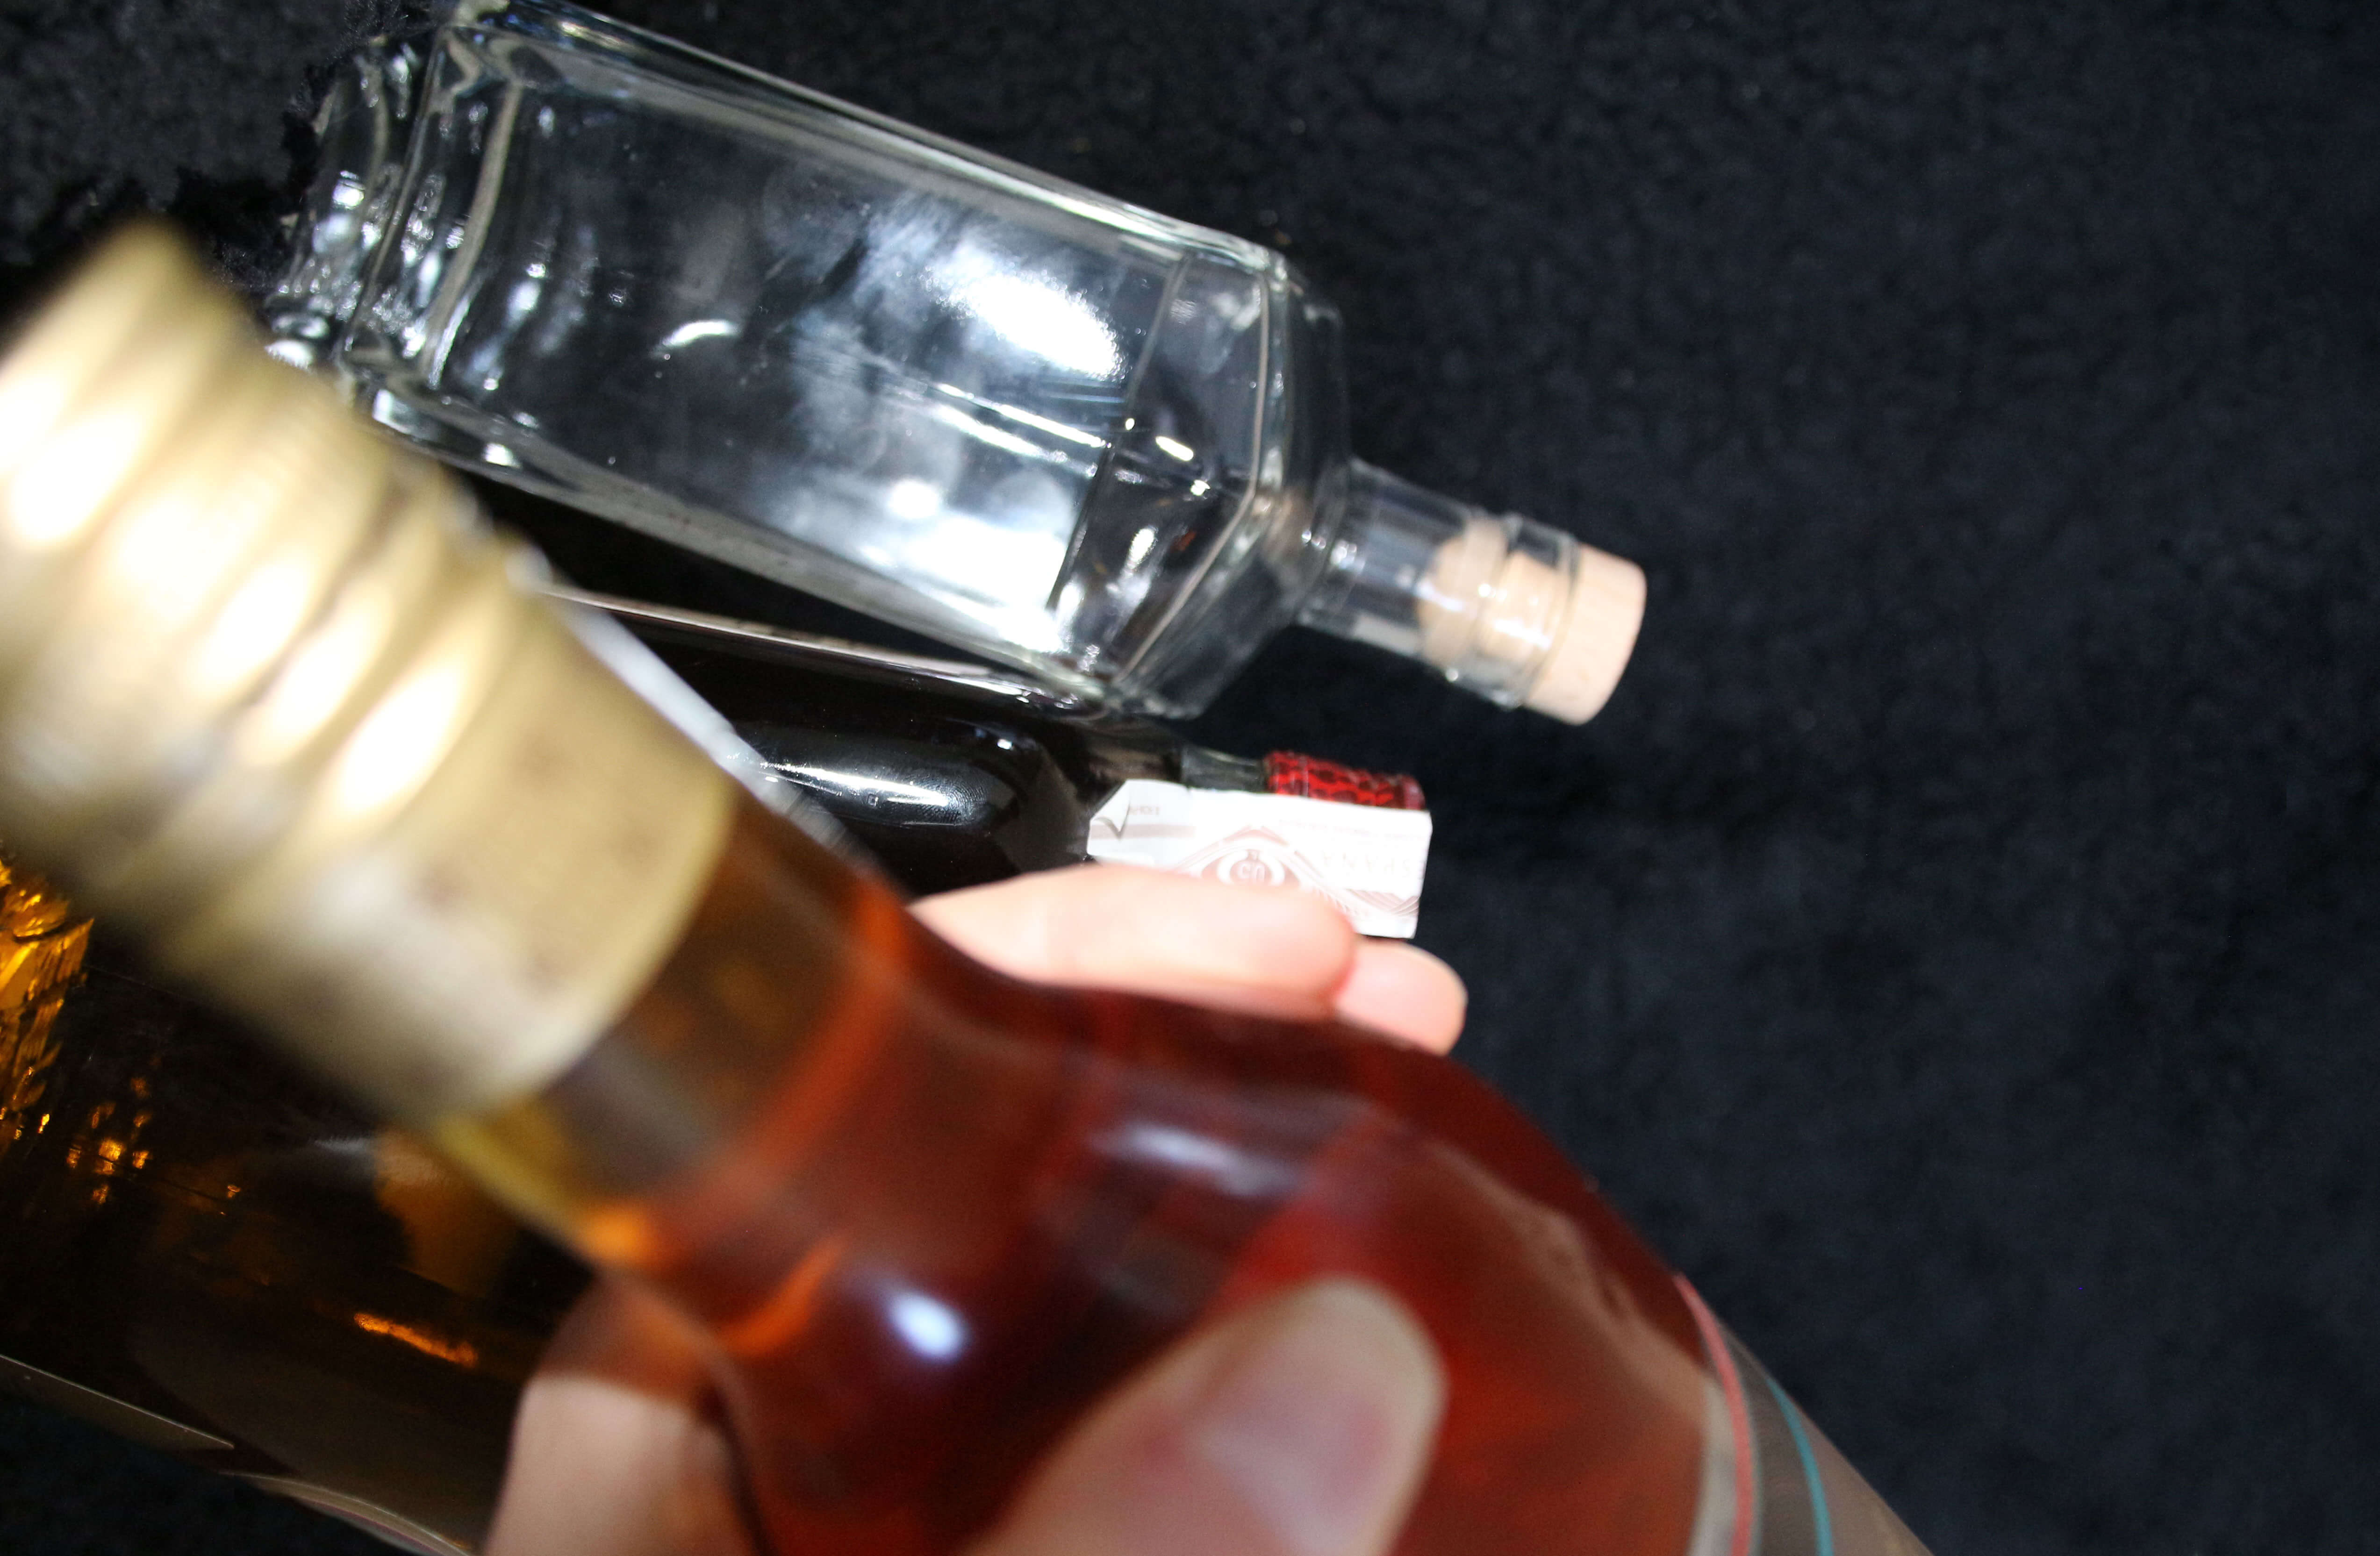 Risiko Alkohol: Was macht Alkohol im Körper?